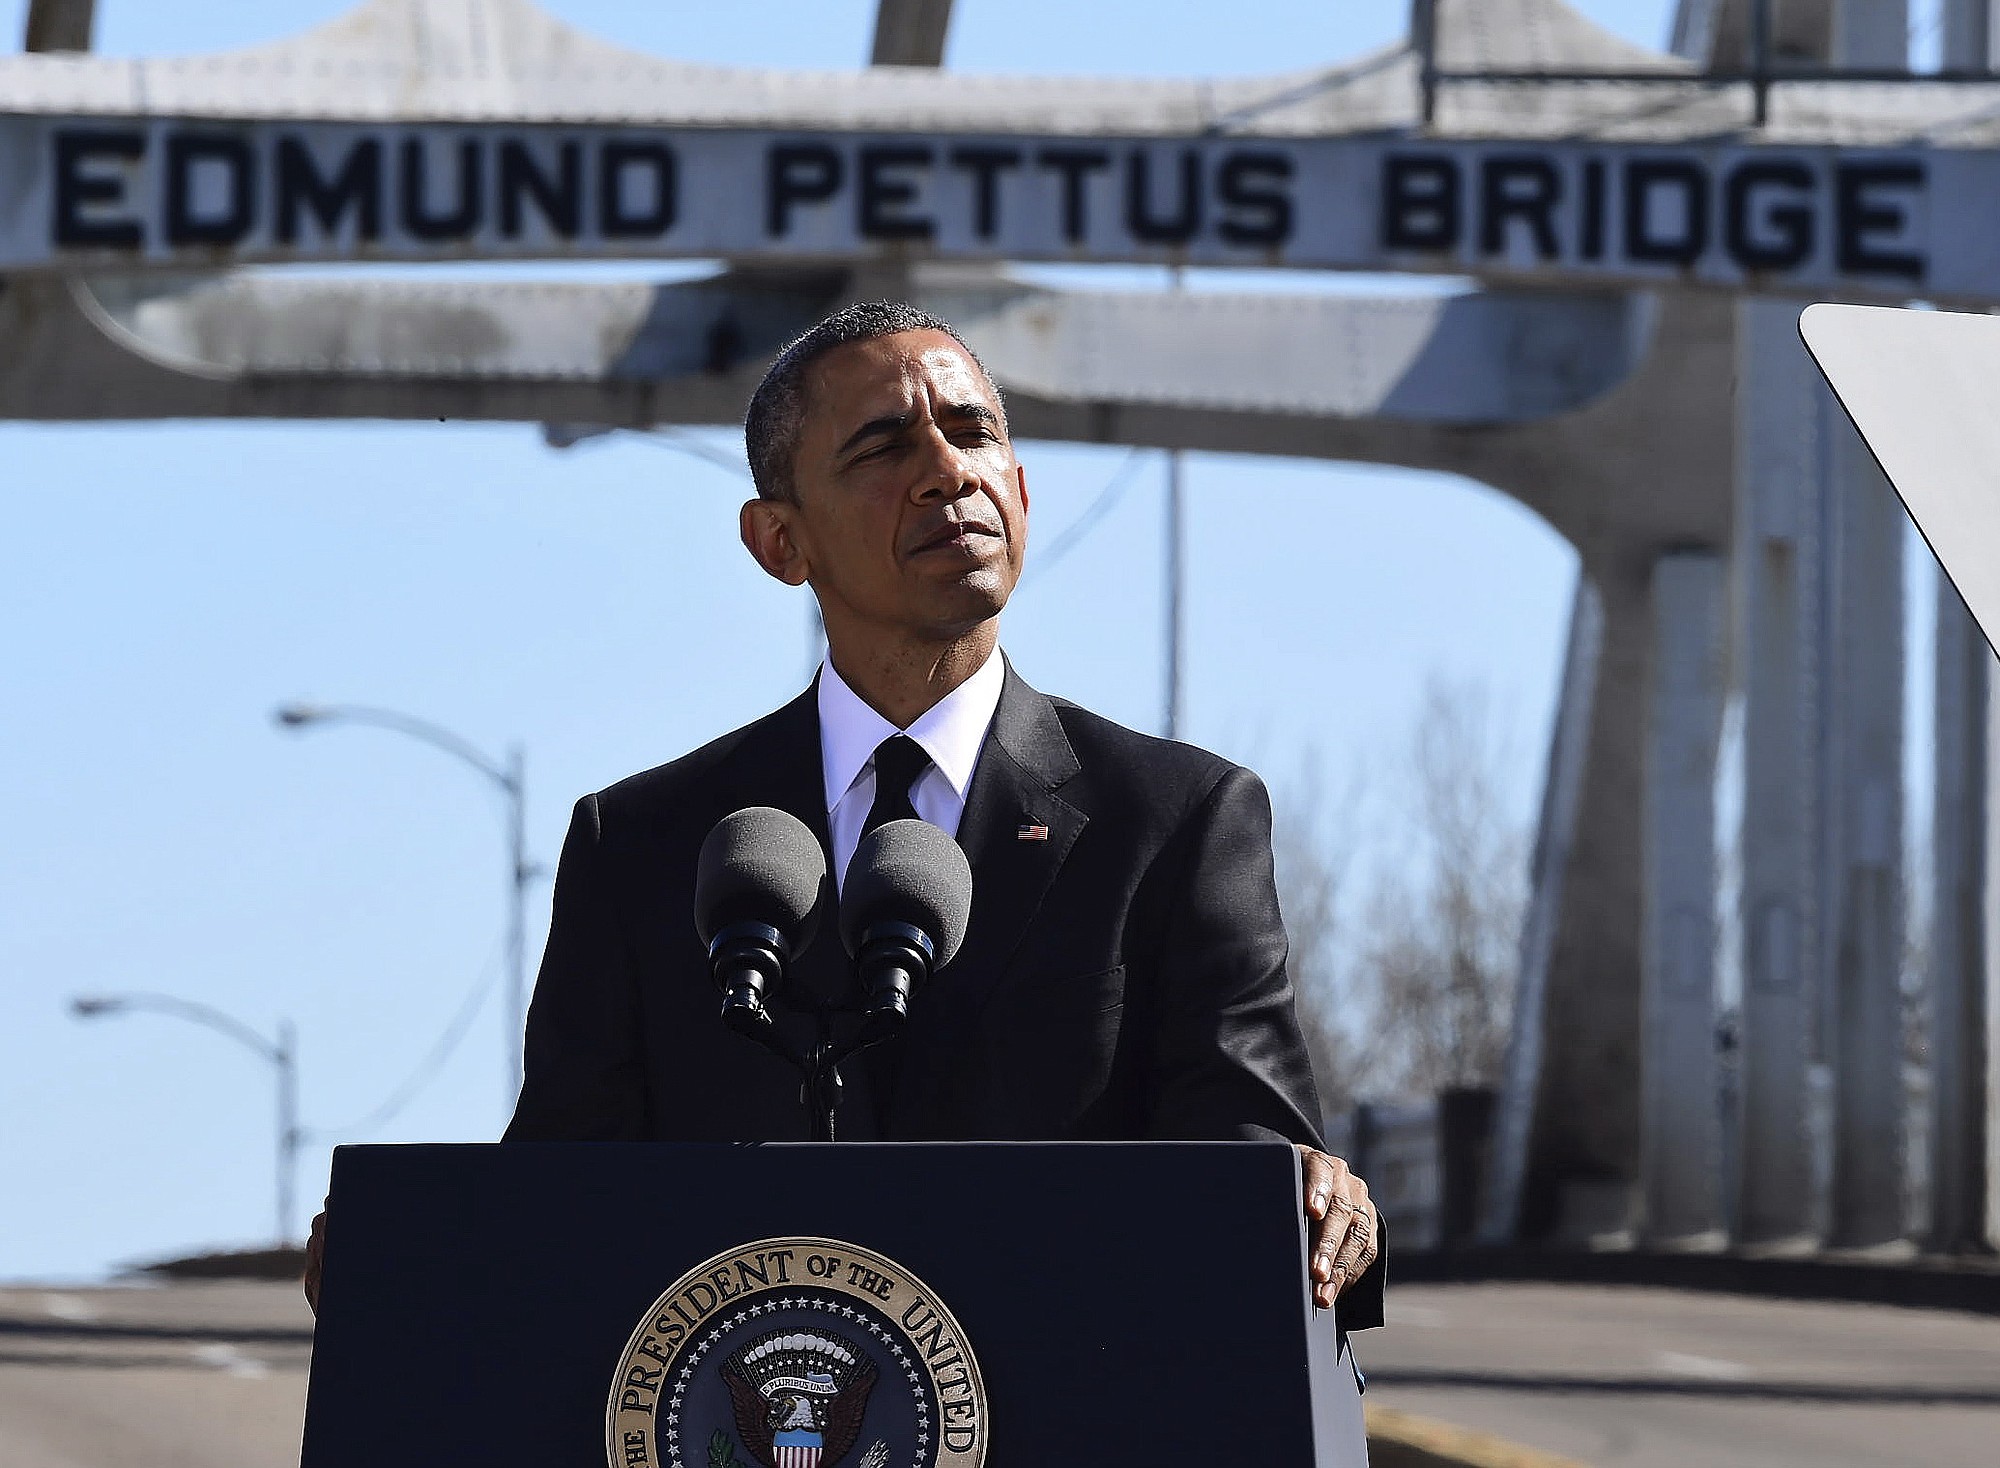 President Barack Obama speaks near the Edmund Pettus Bridge on Saturday in Selma, Ala.